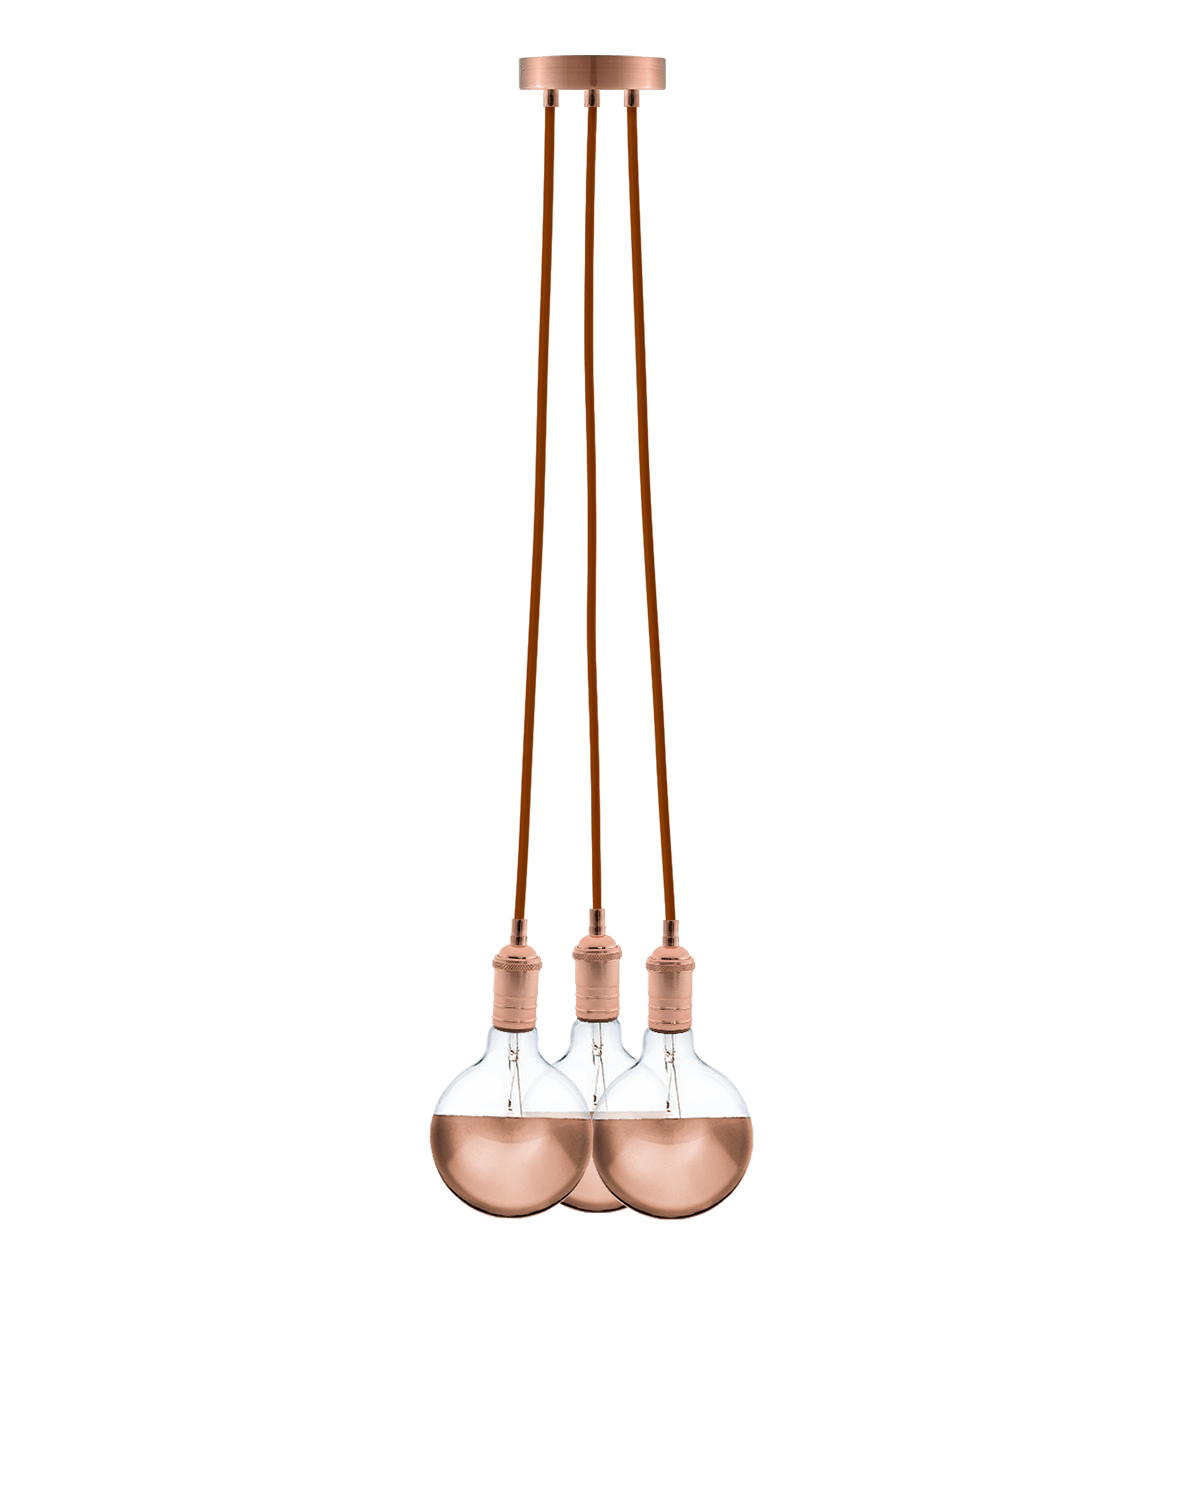 Cluster Chandelier - Even: Rust and Copper Hangout Lighting 3 Even